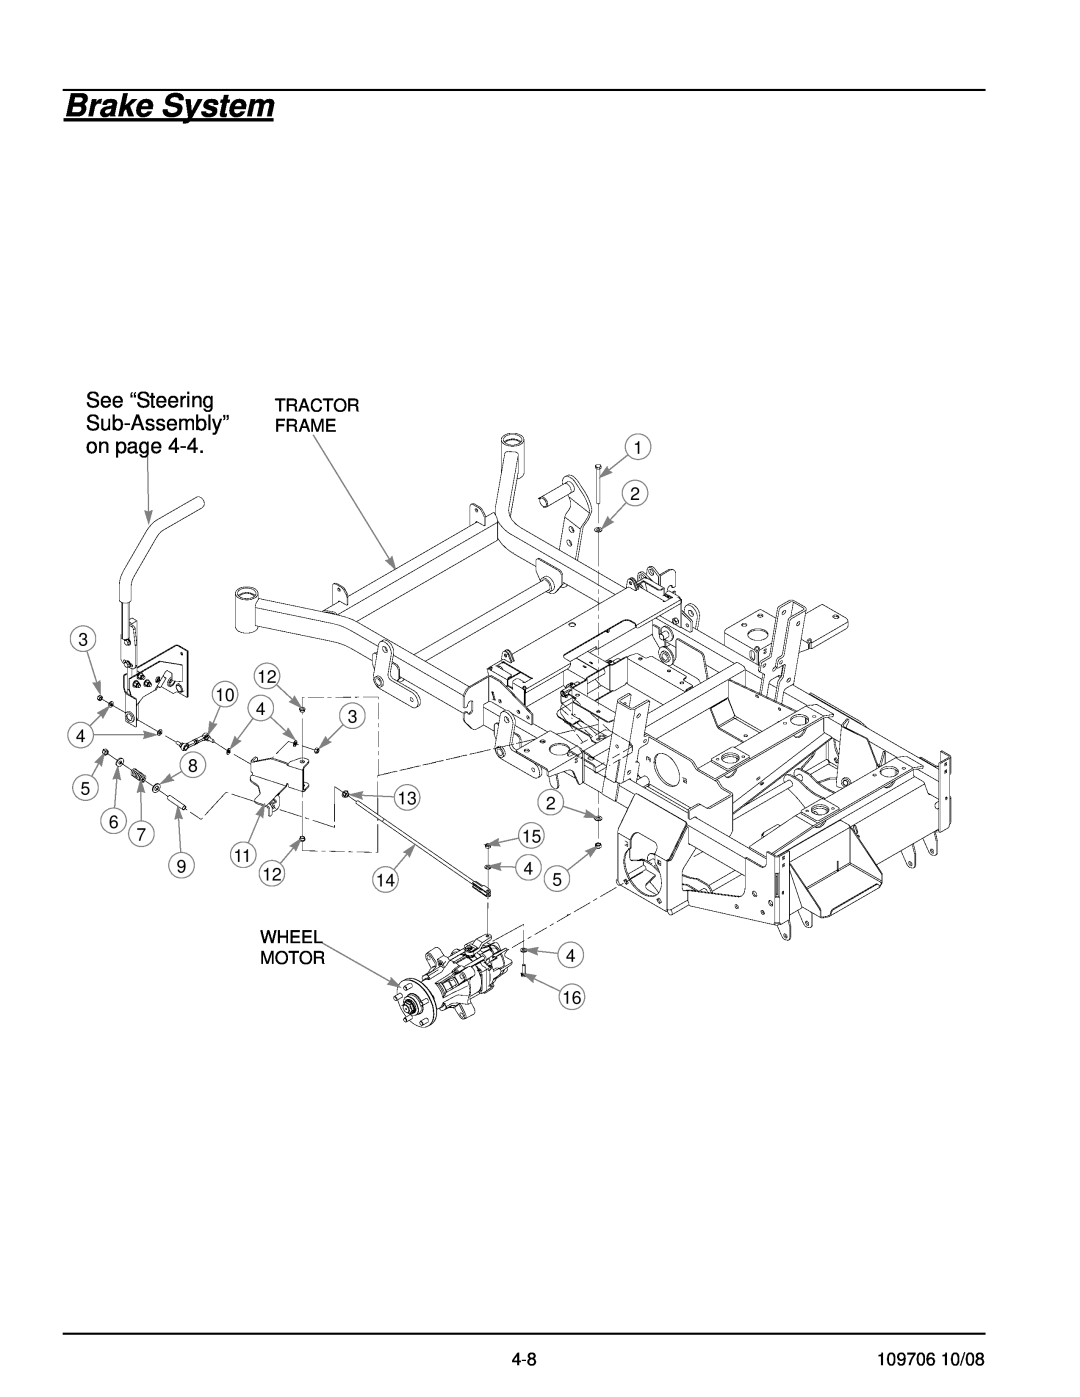 Hustler Turf Diesel Z manual Brake System, See “Steering Sub-Assembly” on page 